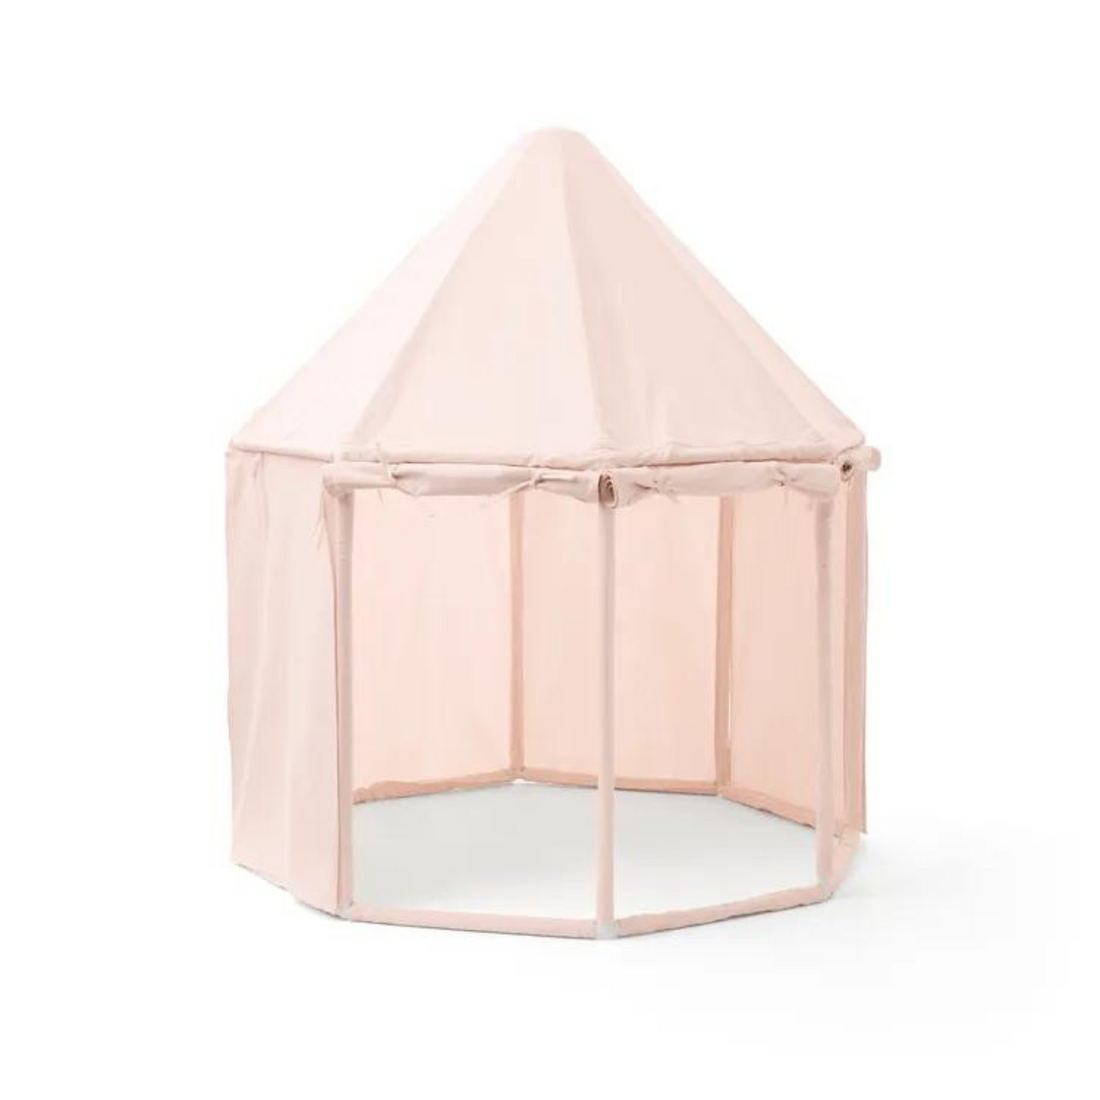 Pavilion tent - Light pink